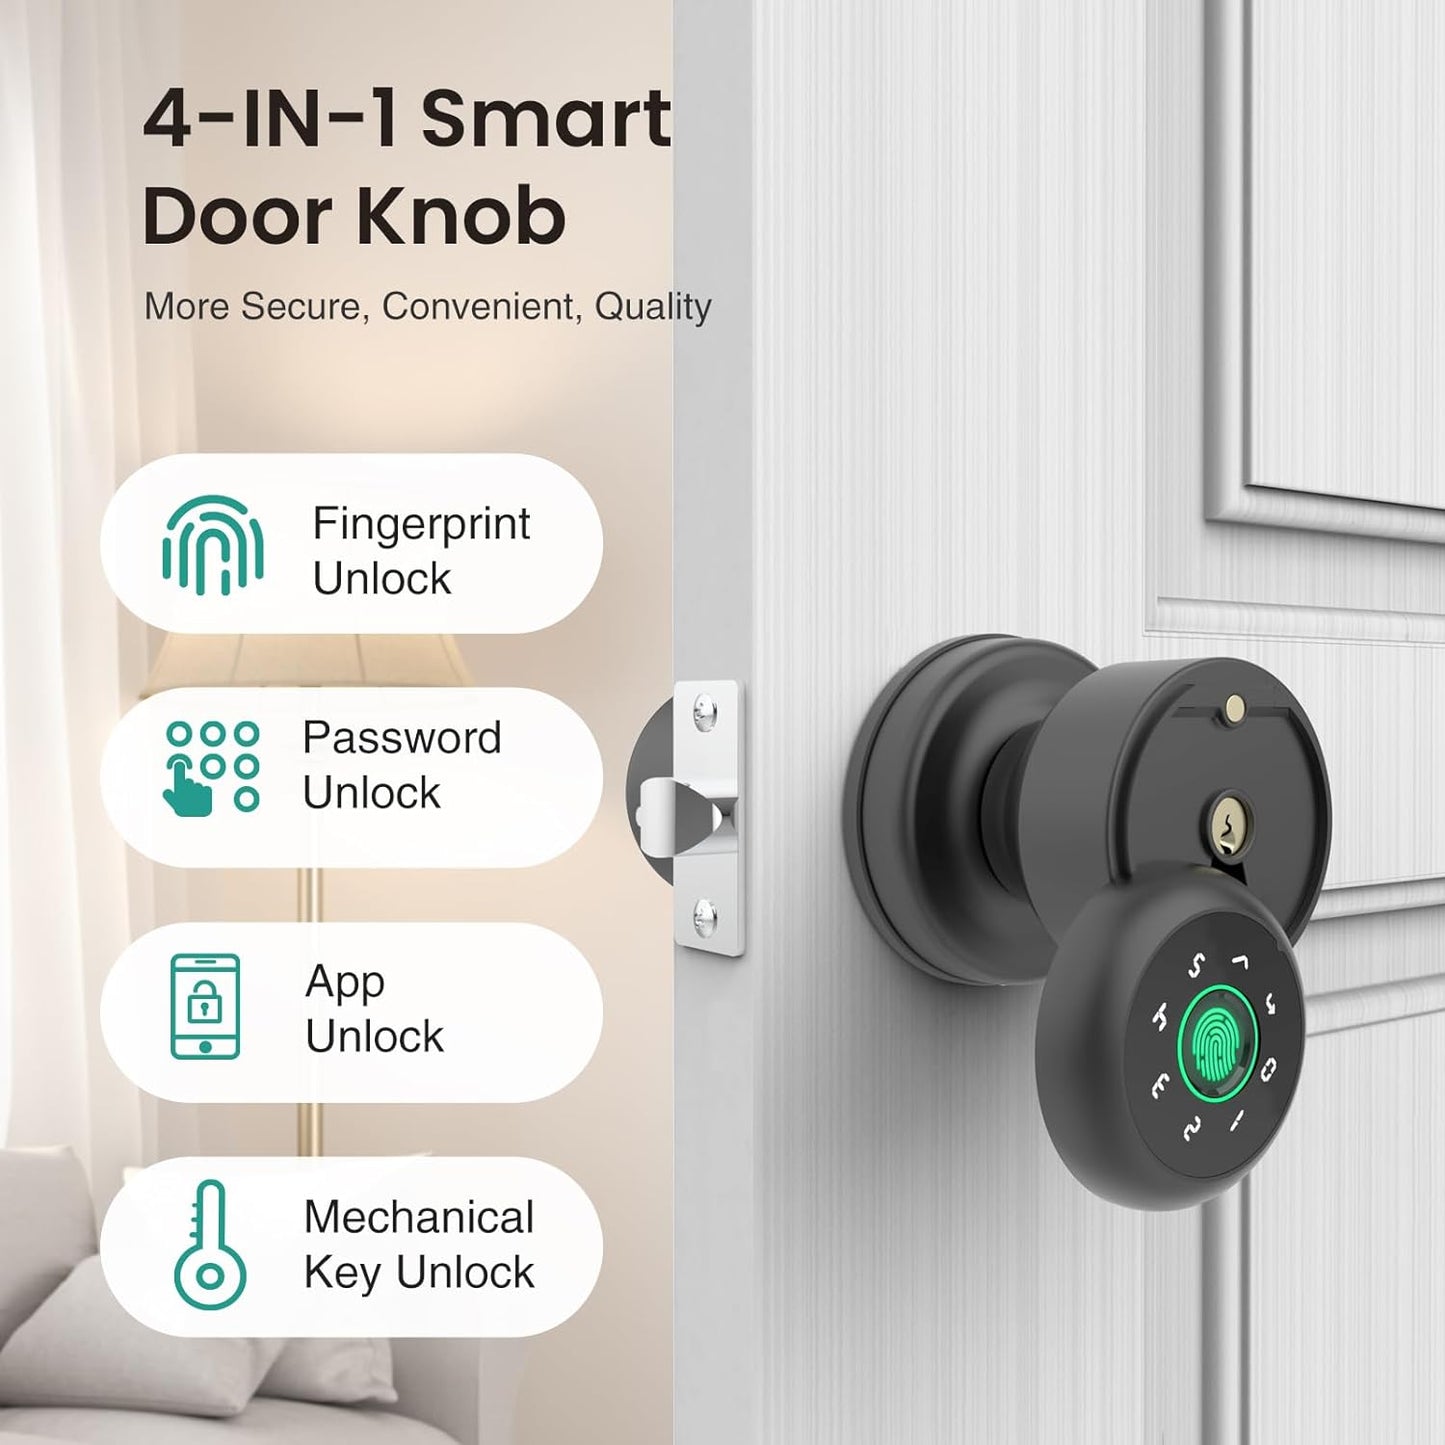 GHome Smart Door Knob Fingerprint Door Lock with Keypad, Biometric Smart Lock - App Control, Interior Door Knob with Key Great for Bedroom, Apartments, Offices and Hotels